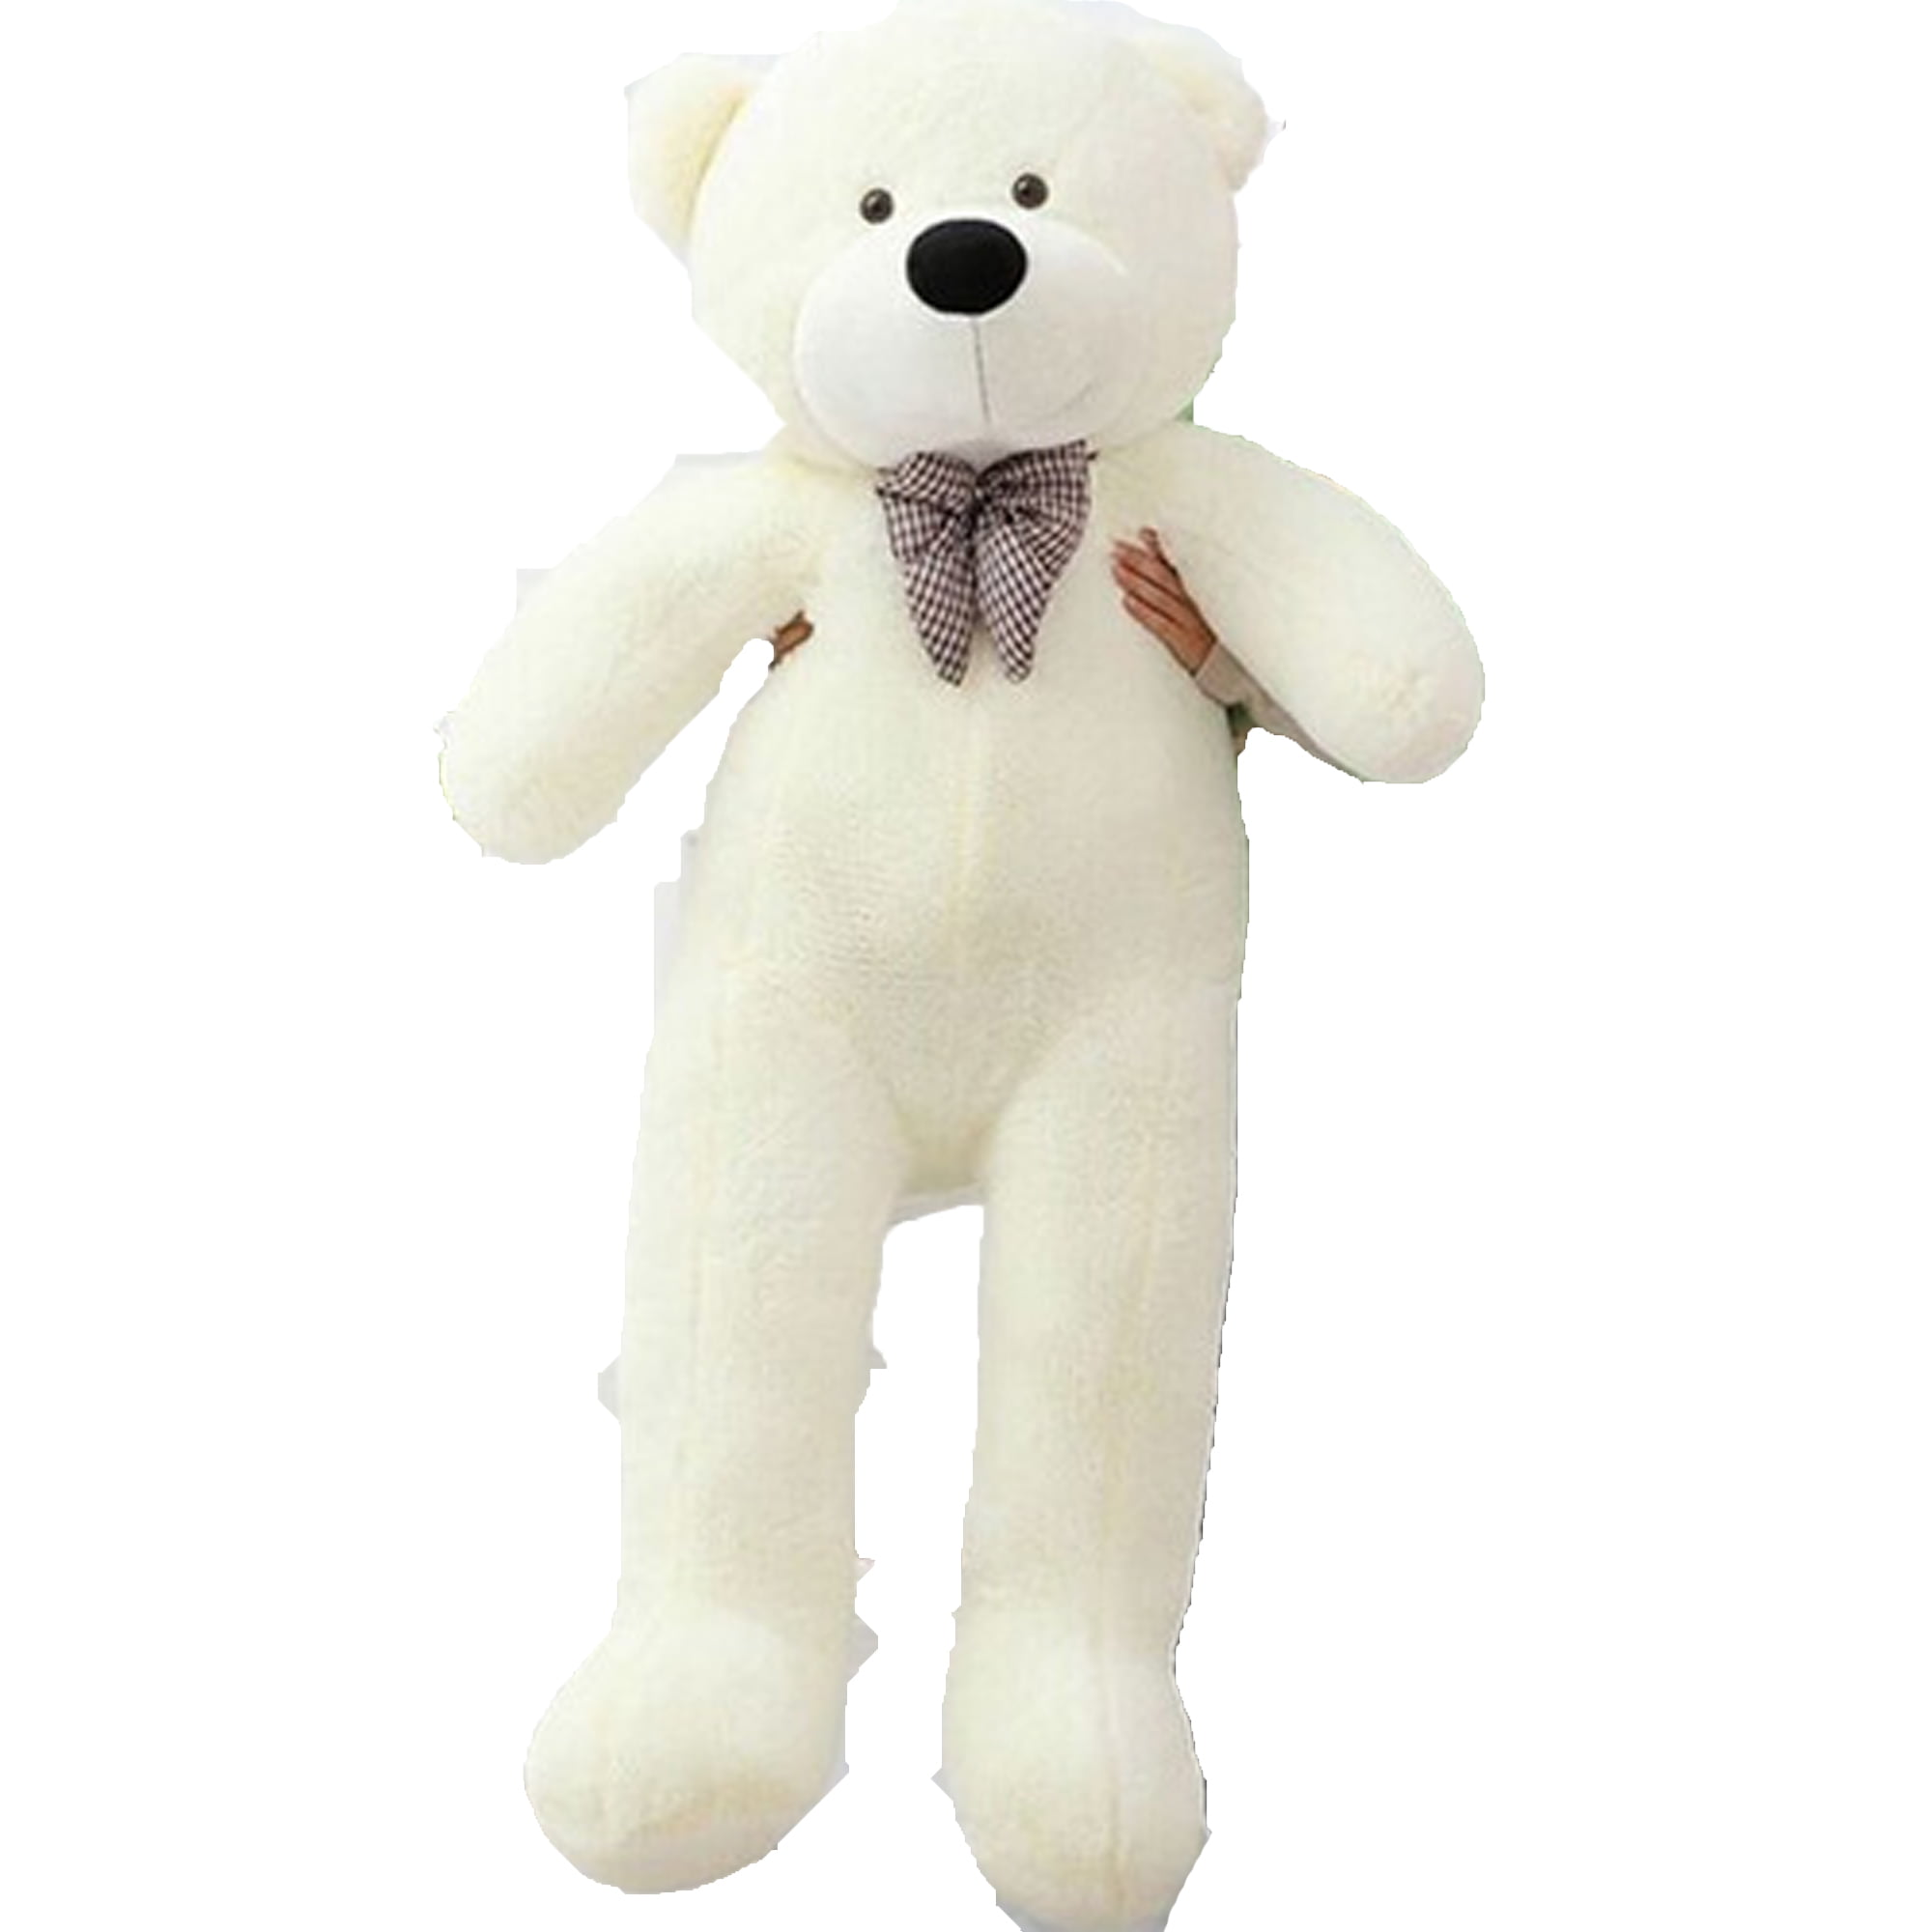 100CM Giant Big Plush Stuffed Teddy Bear Huge Soft 100% Cotton Toy Best Gift 